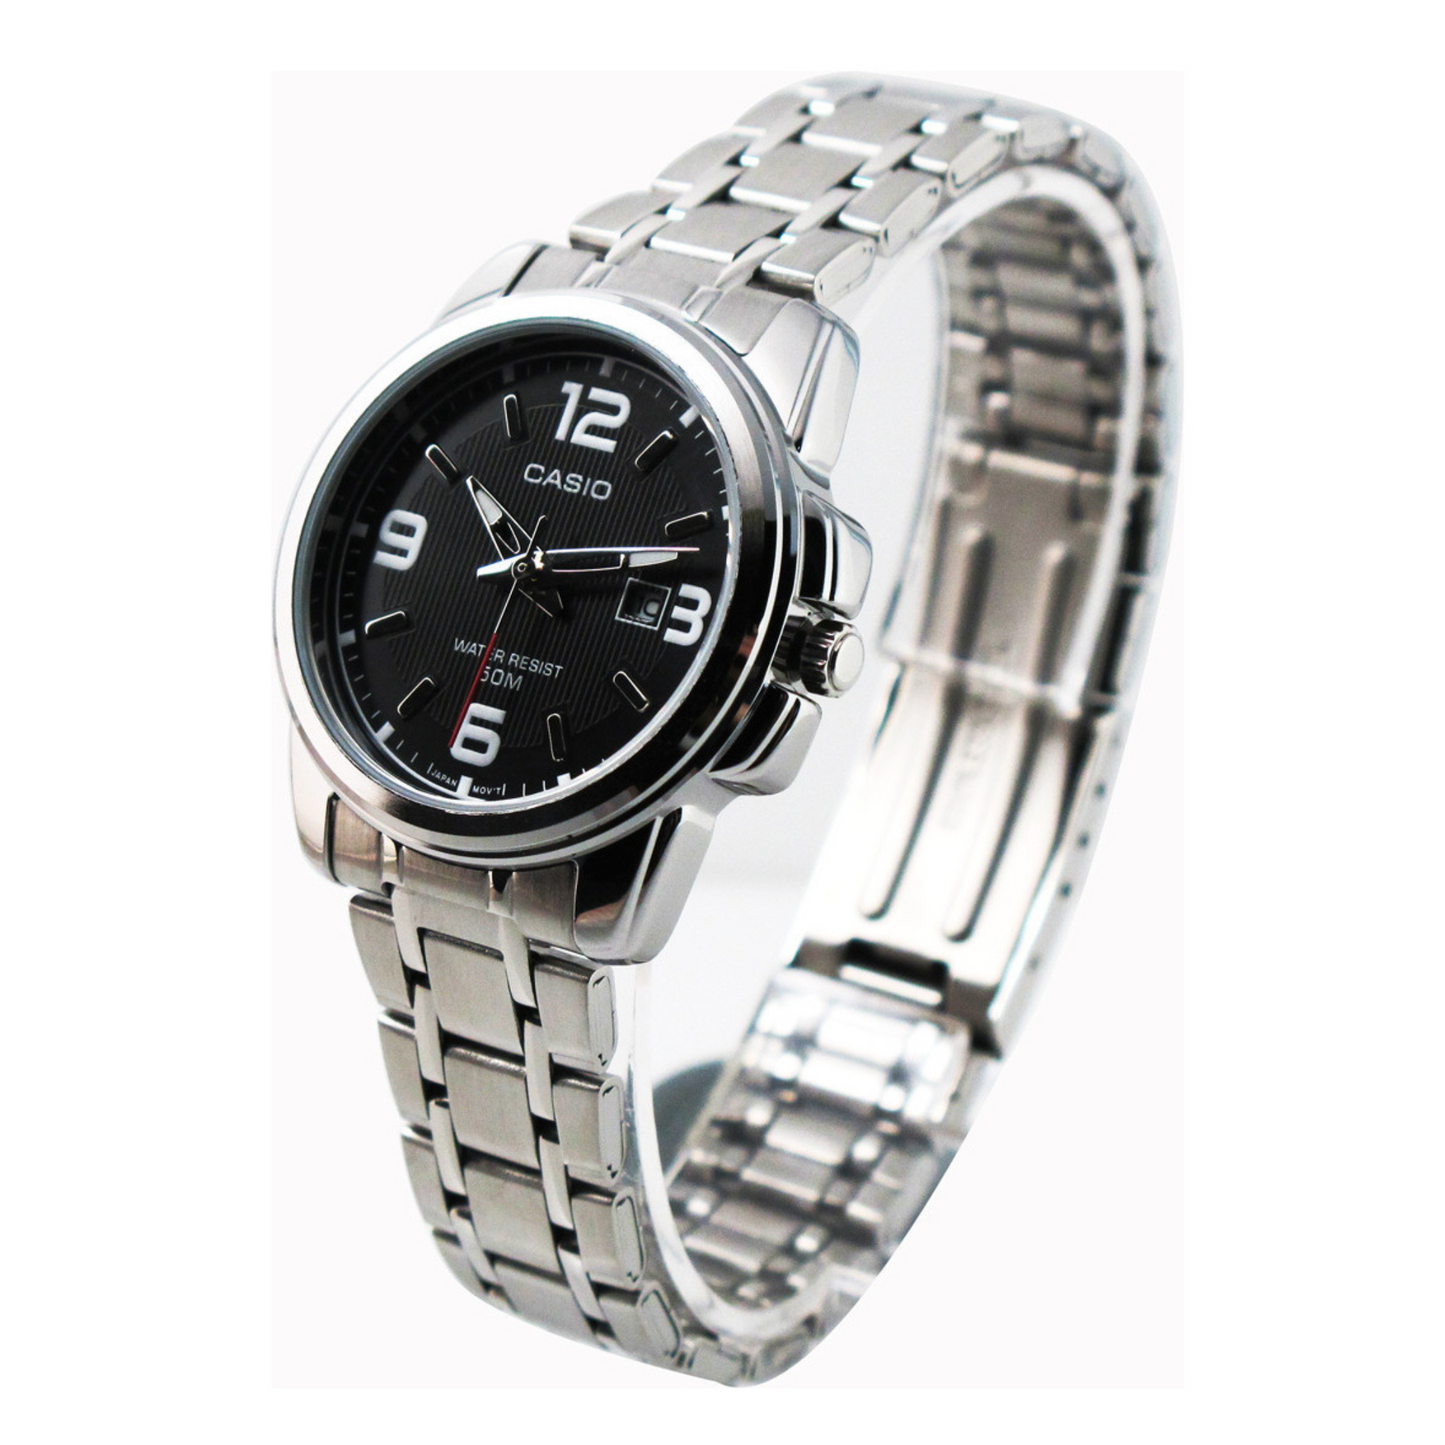 Reloj Casio mujer Modelo LTP-1314D-1AV